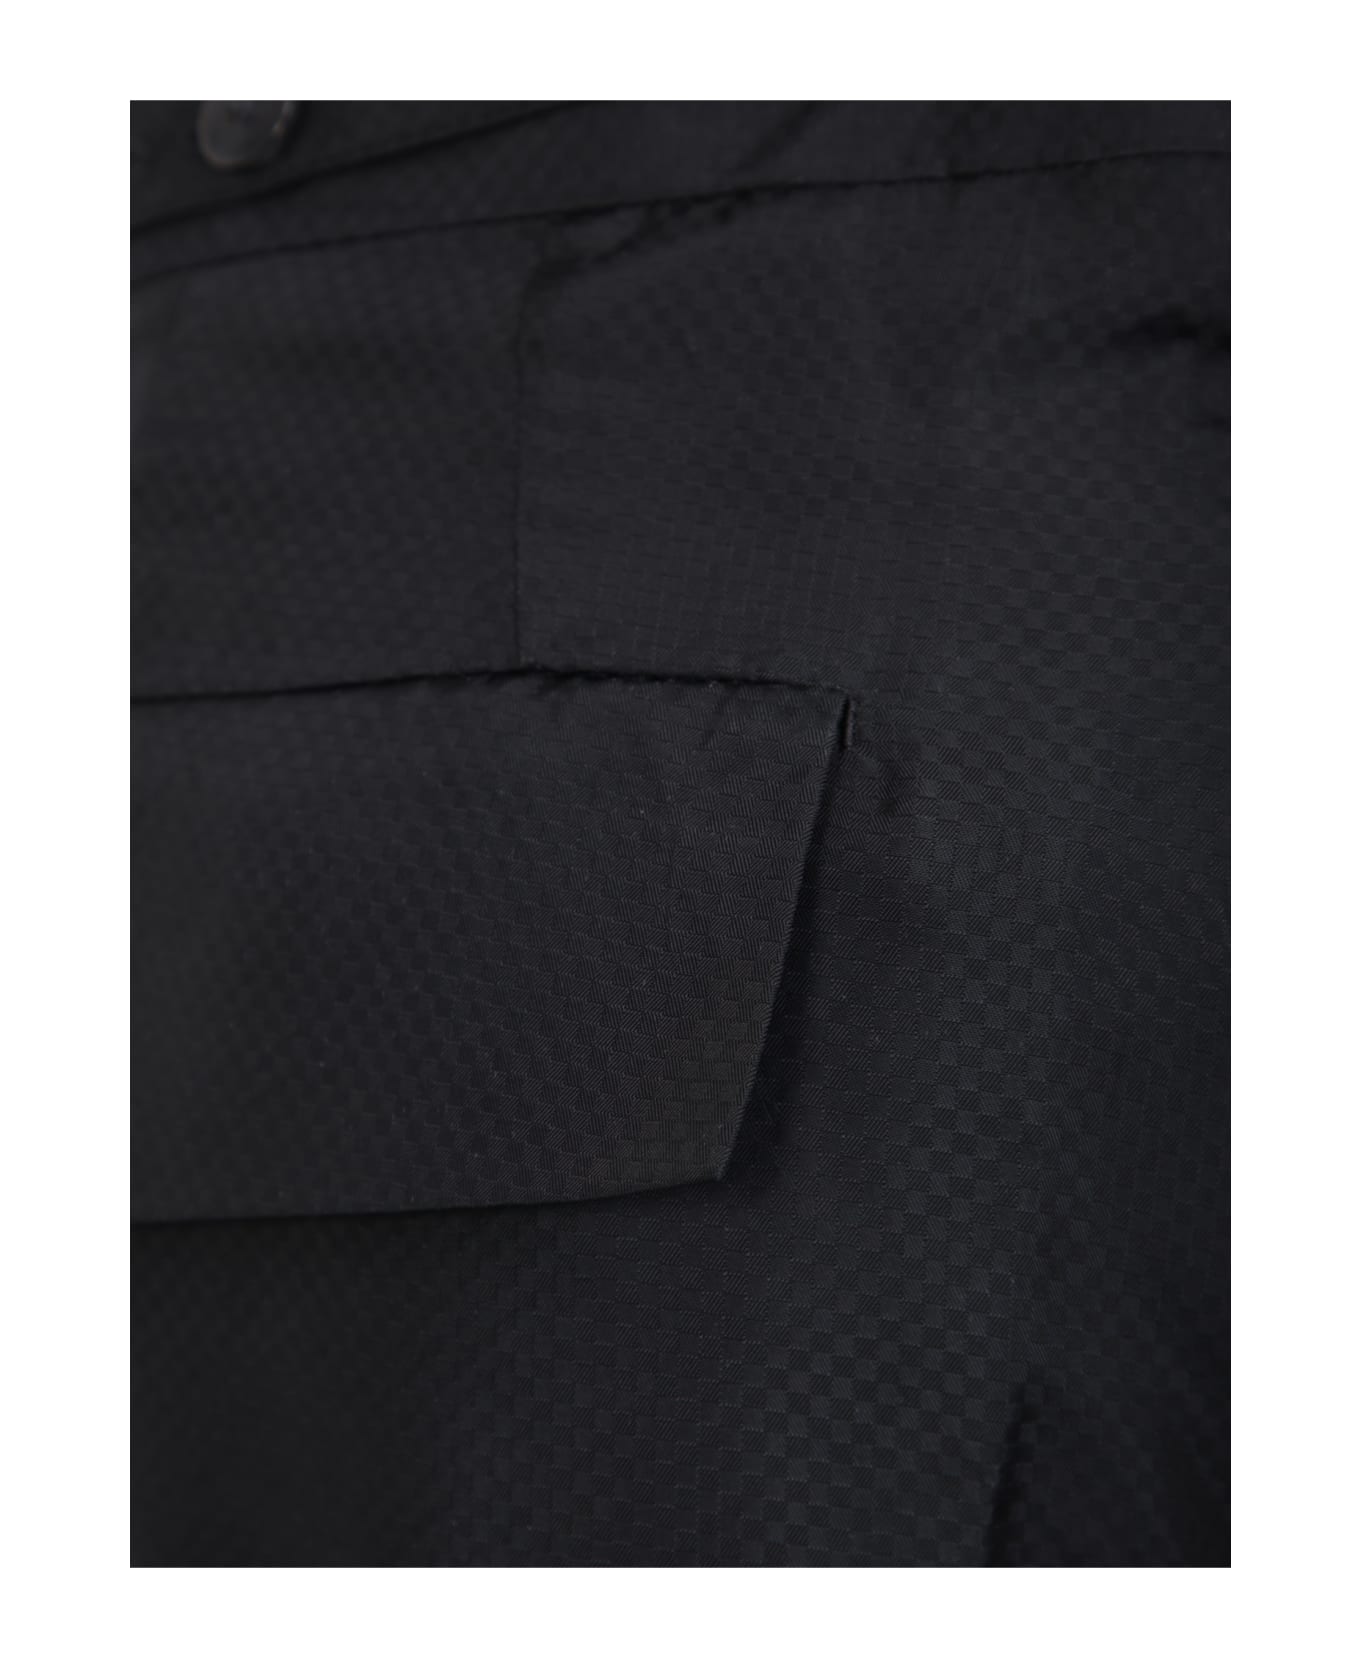 Sapio Straight-leg Tailored Trousers - Black